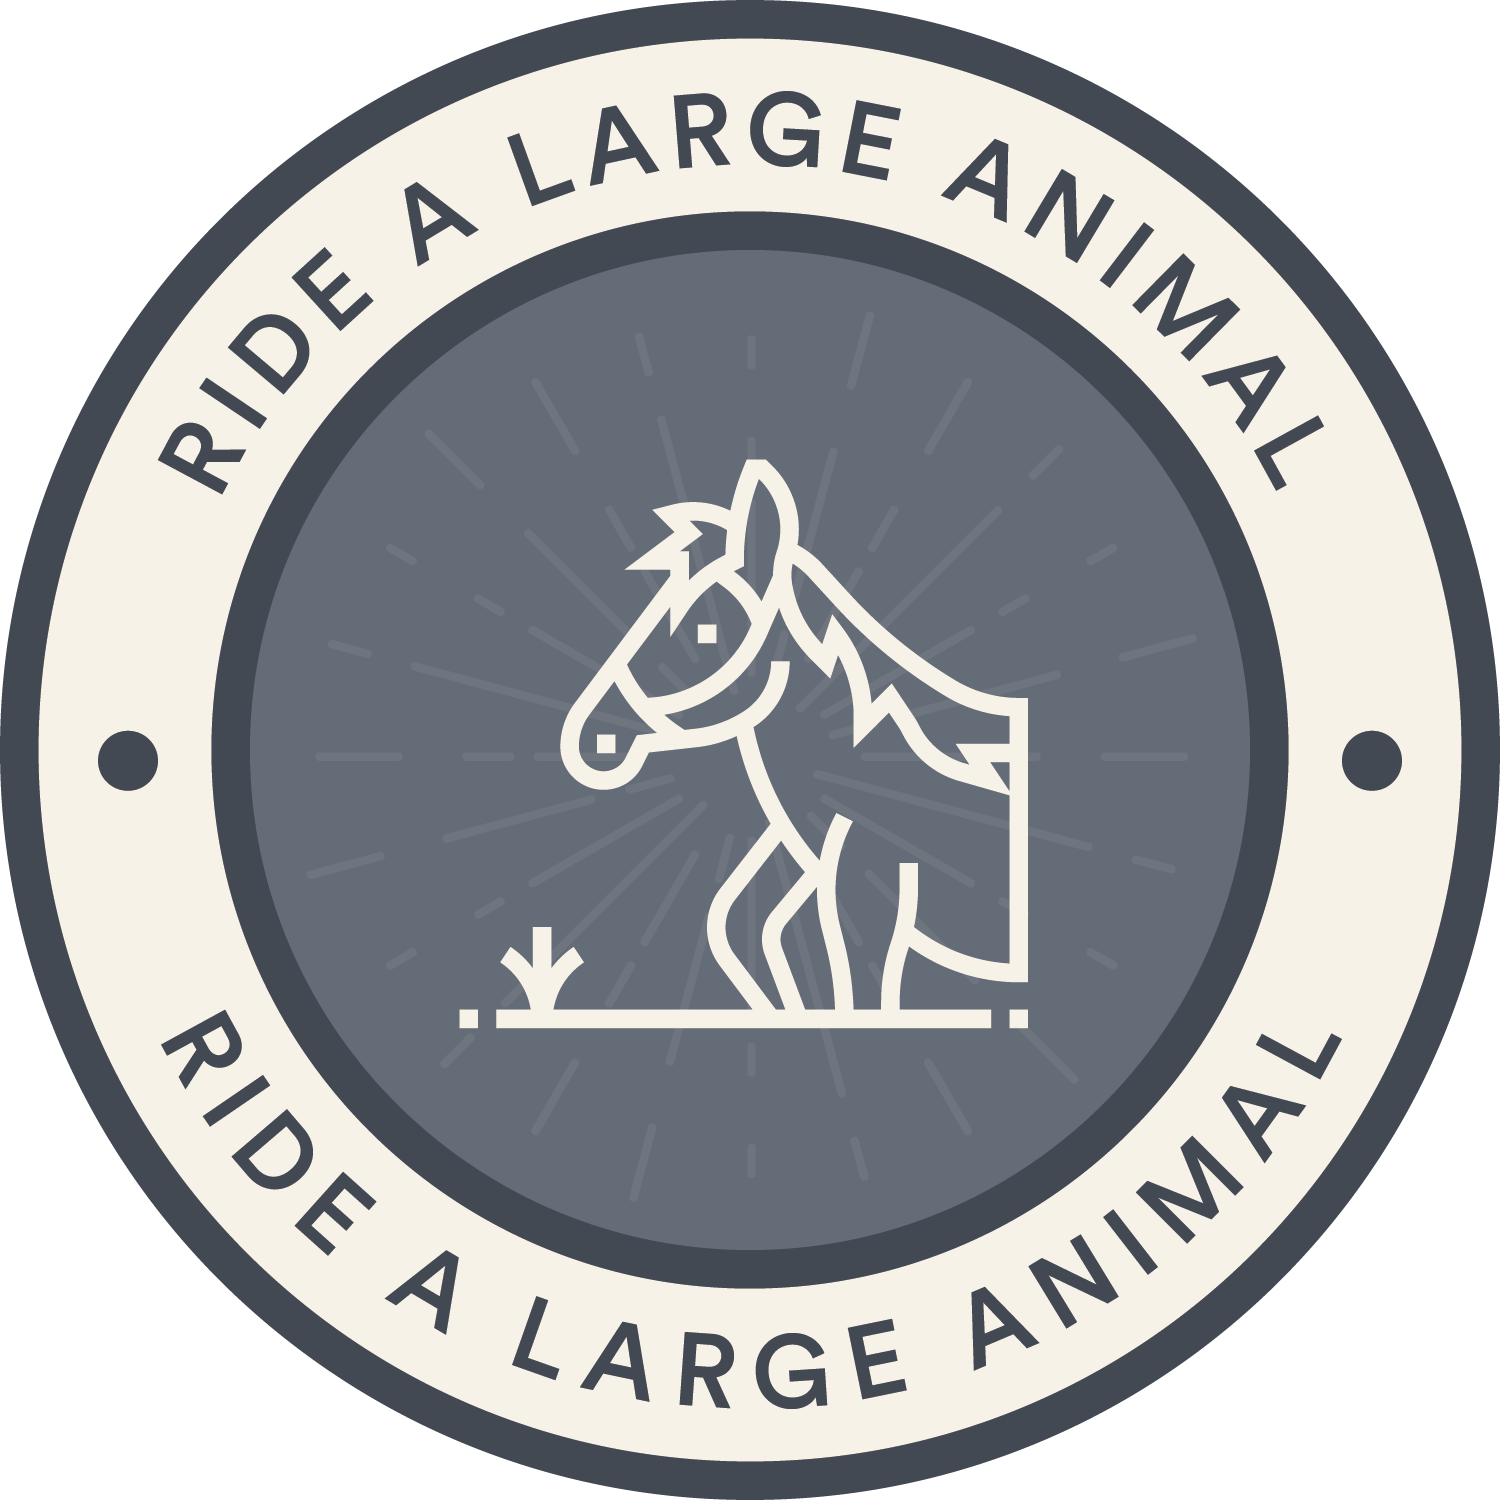 Ride a large animal